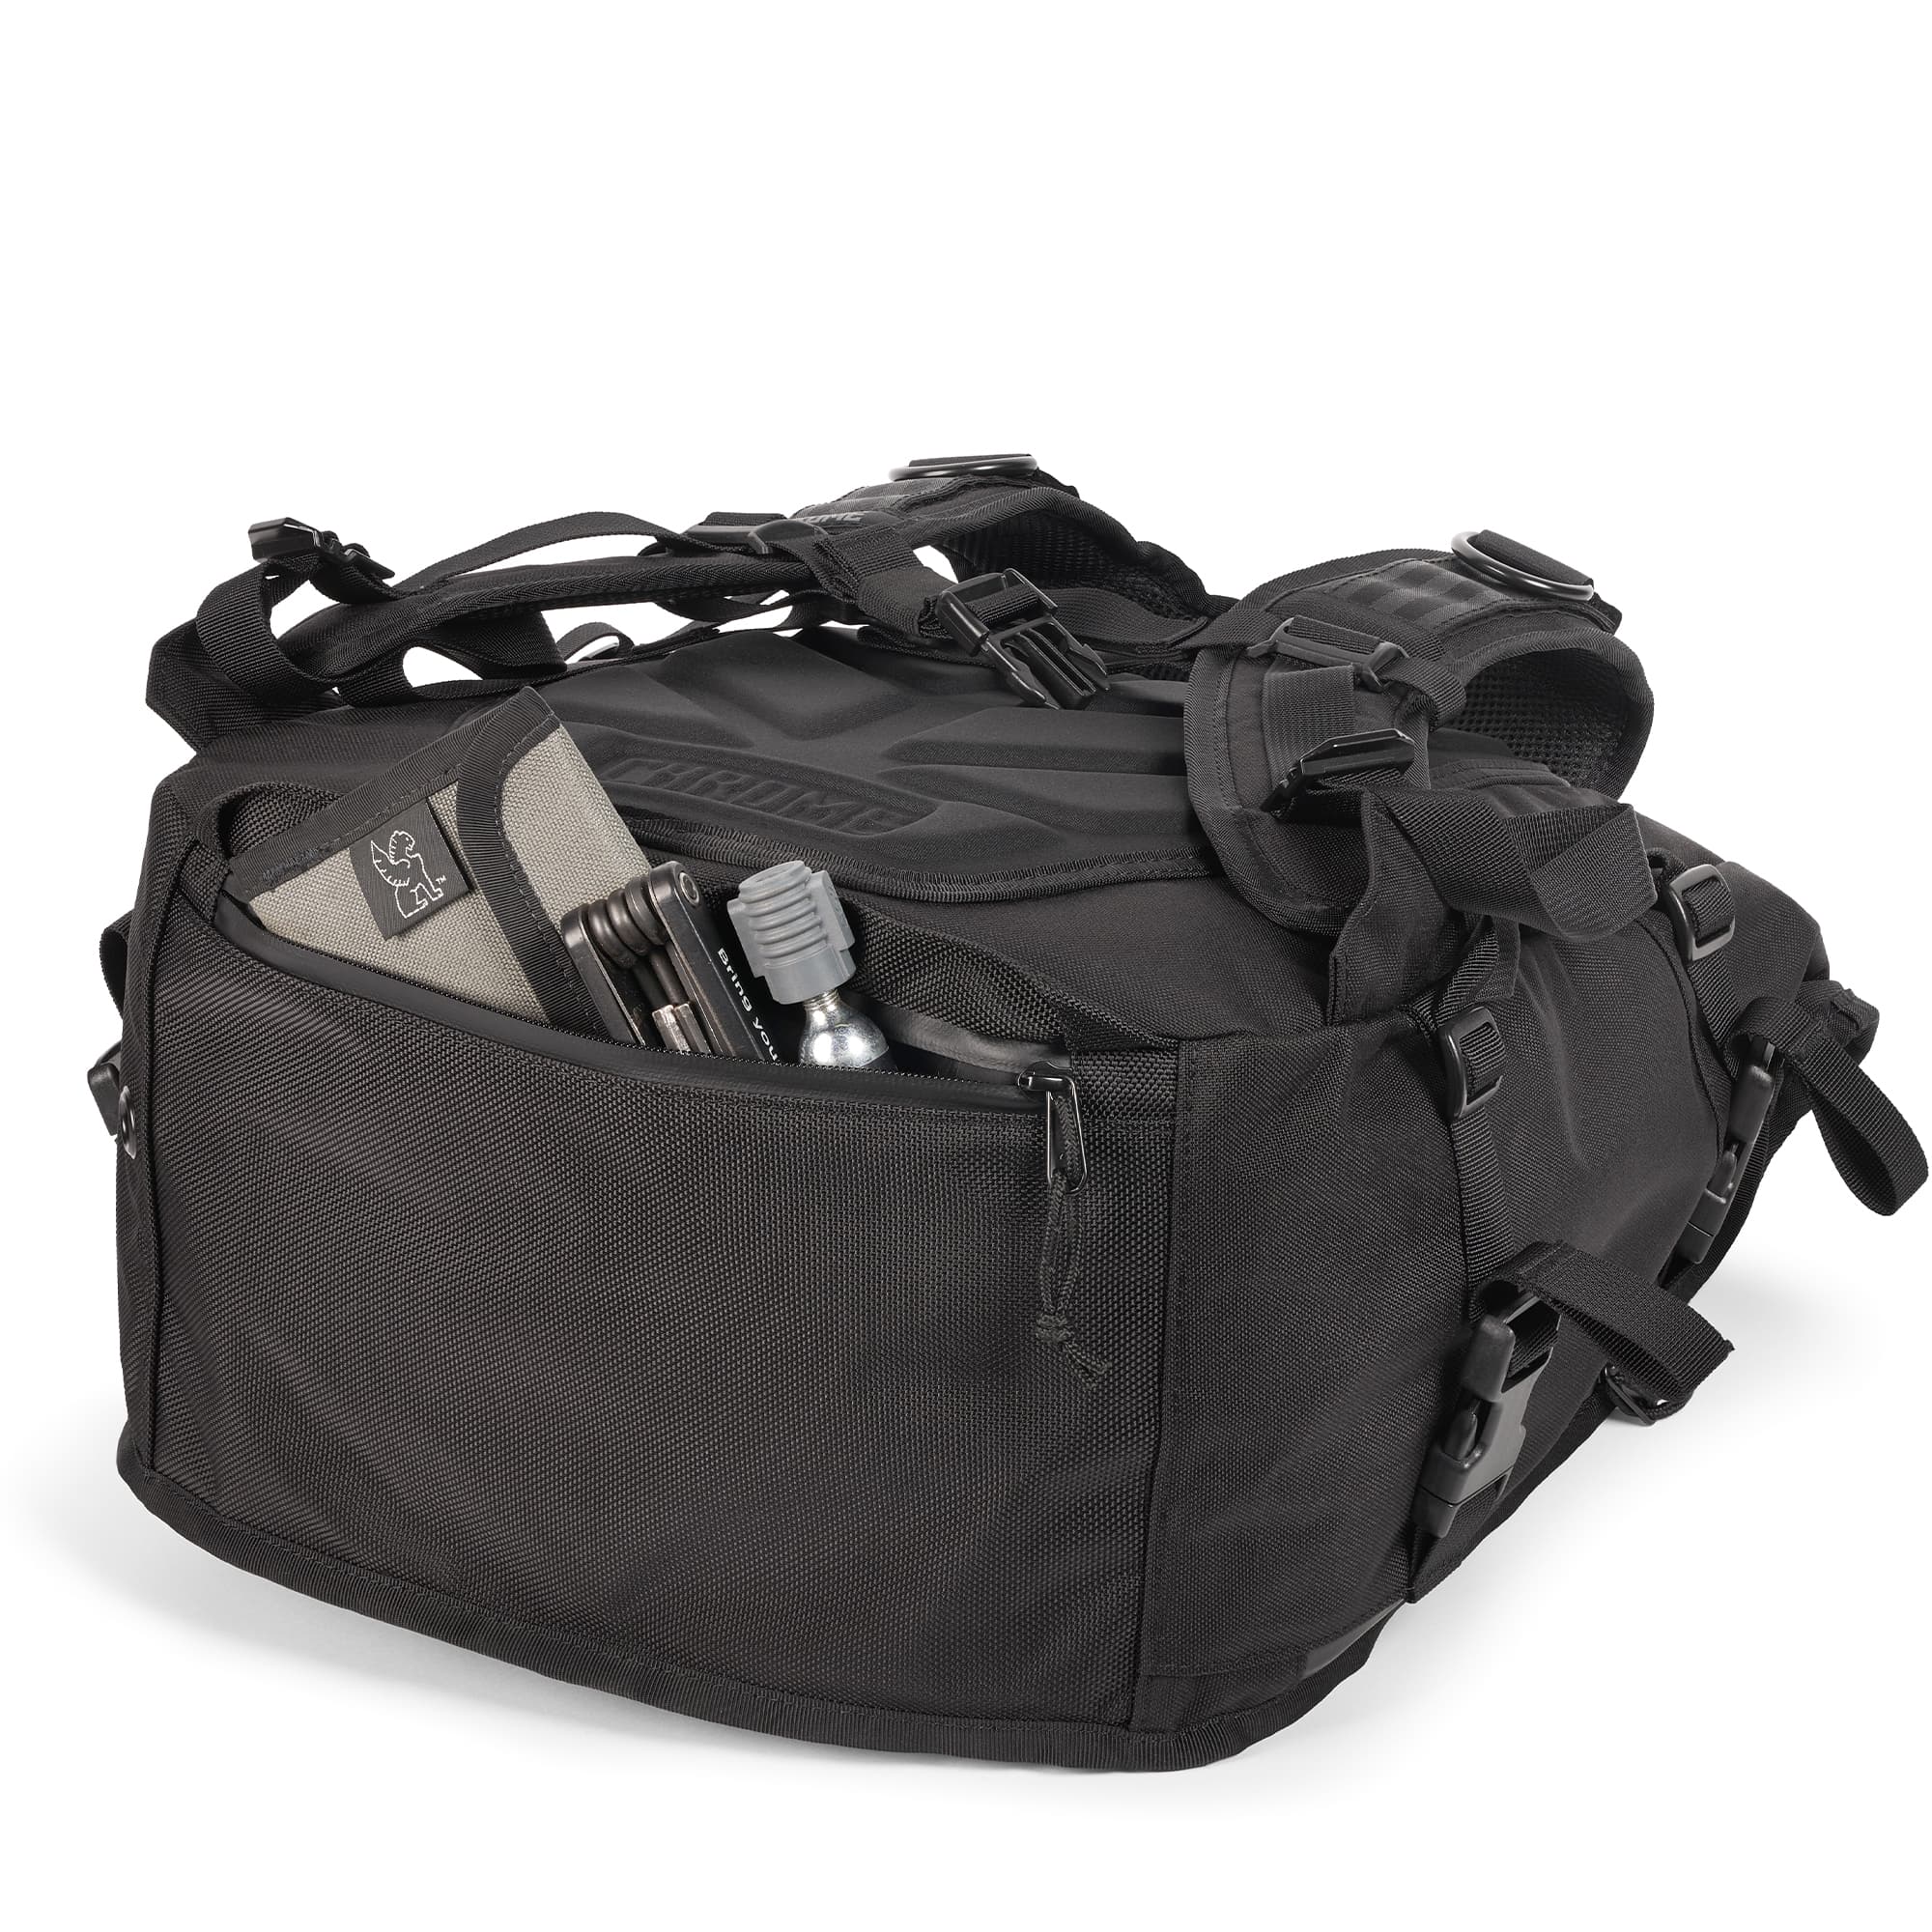 Warsaw medium size flap backpack in black bottom zipper